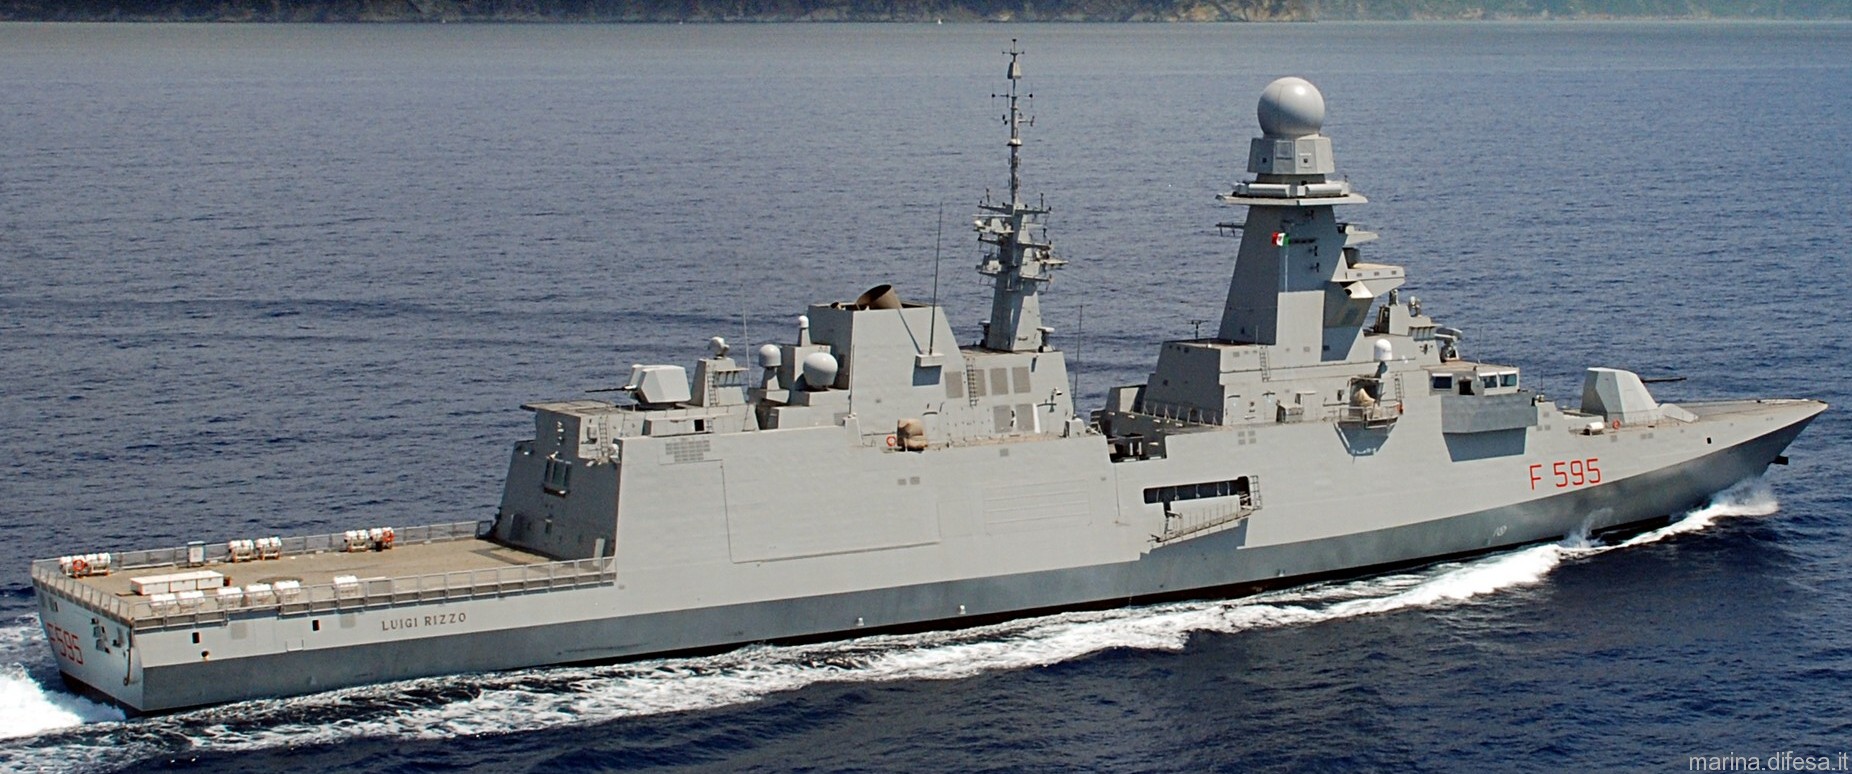 f-595 luigi rizzo its nave bergamini fremm class guided missile frigate italian navy marina militare 08